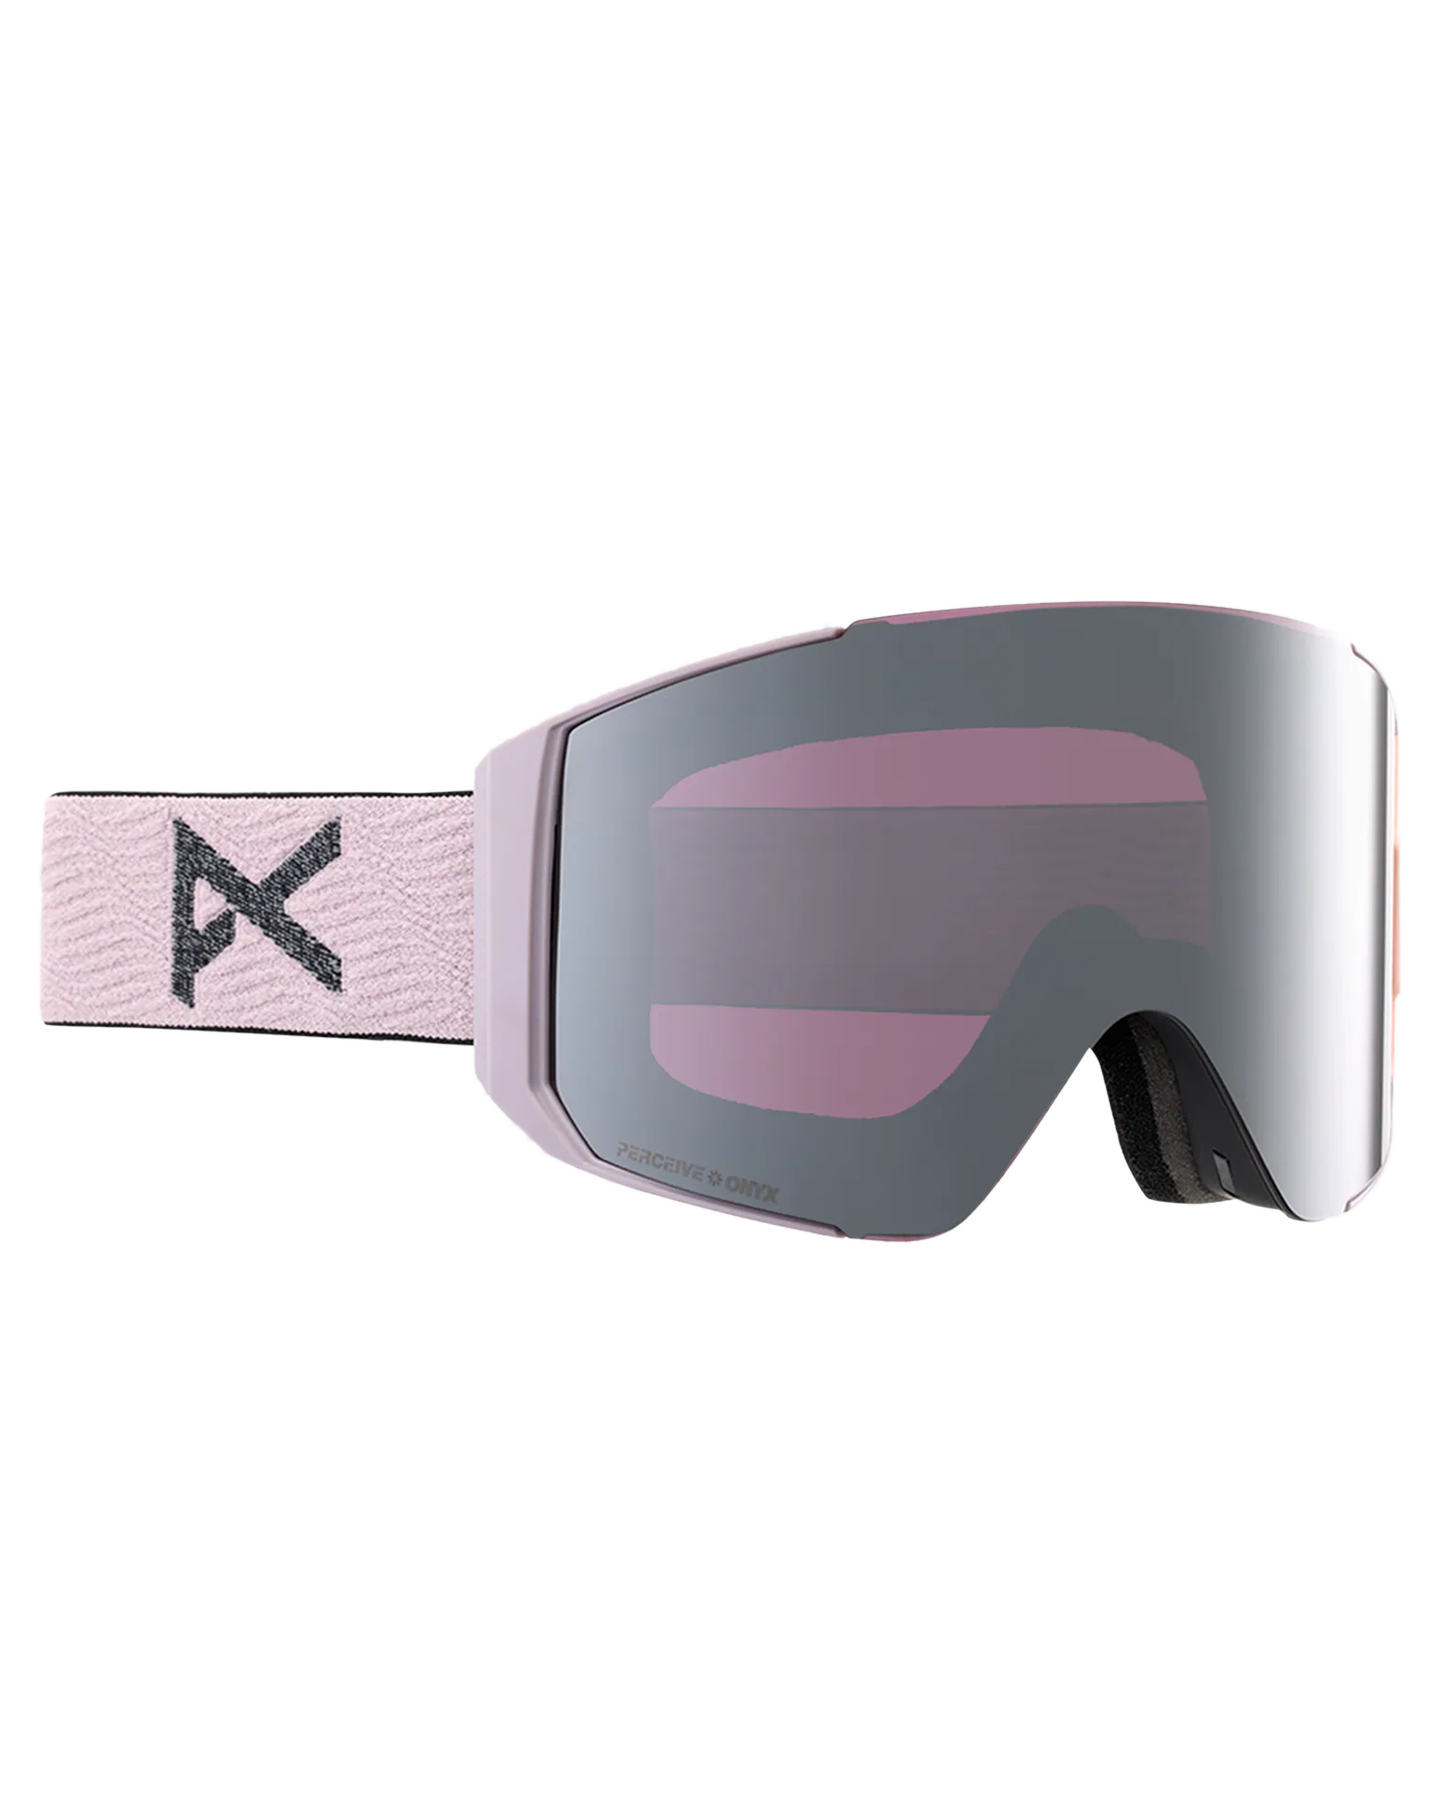 Anon Sync Snow Goggles + Bonus Lens - Elderberry/Perceive Sunny Onyx Lens Snow Goggles - Mens - Trojan Wake Ski Snow